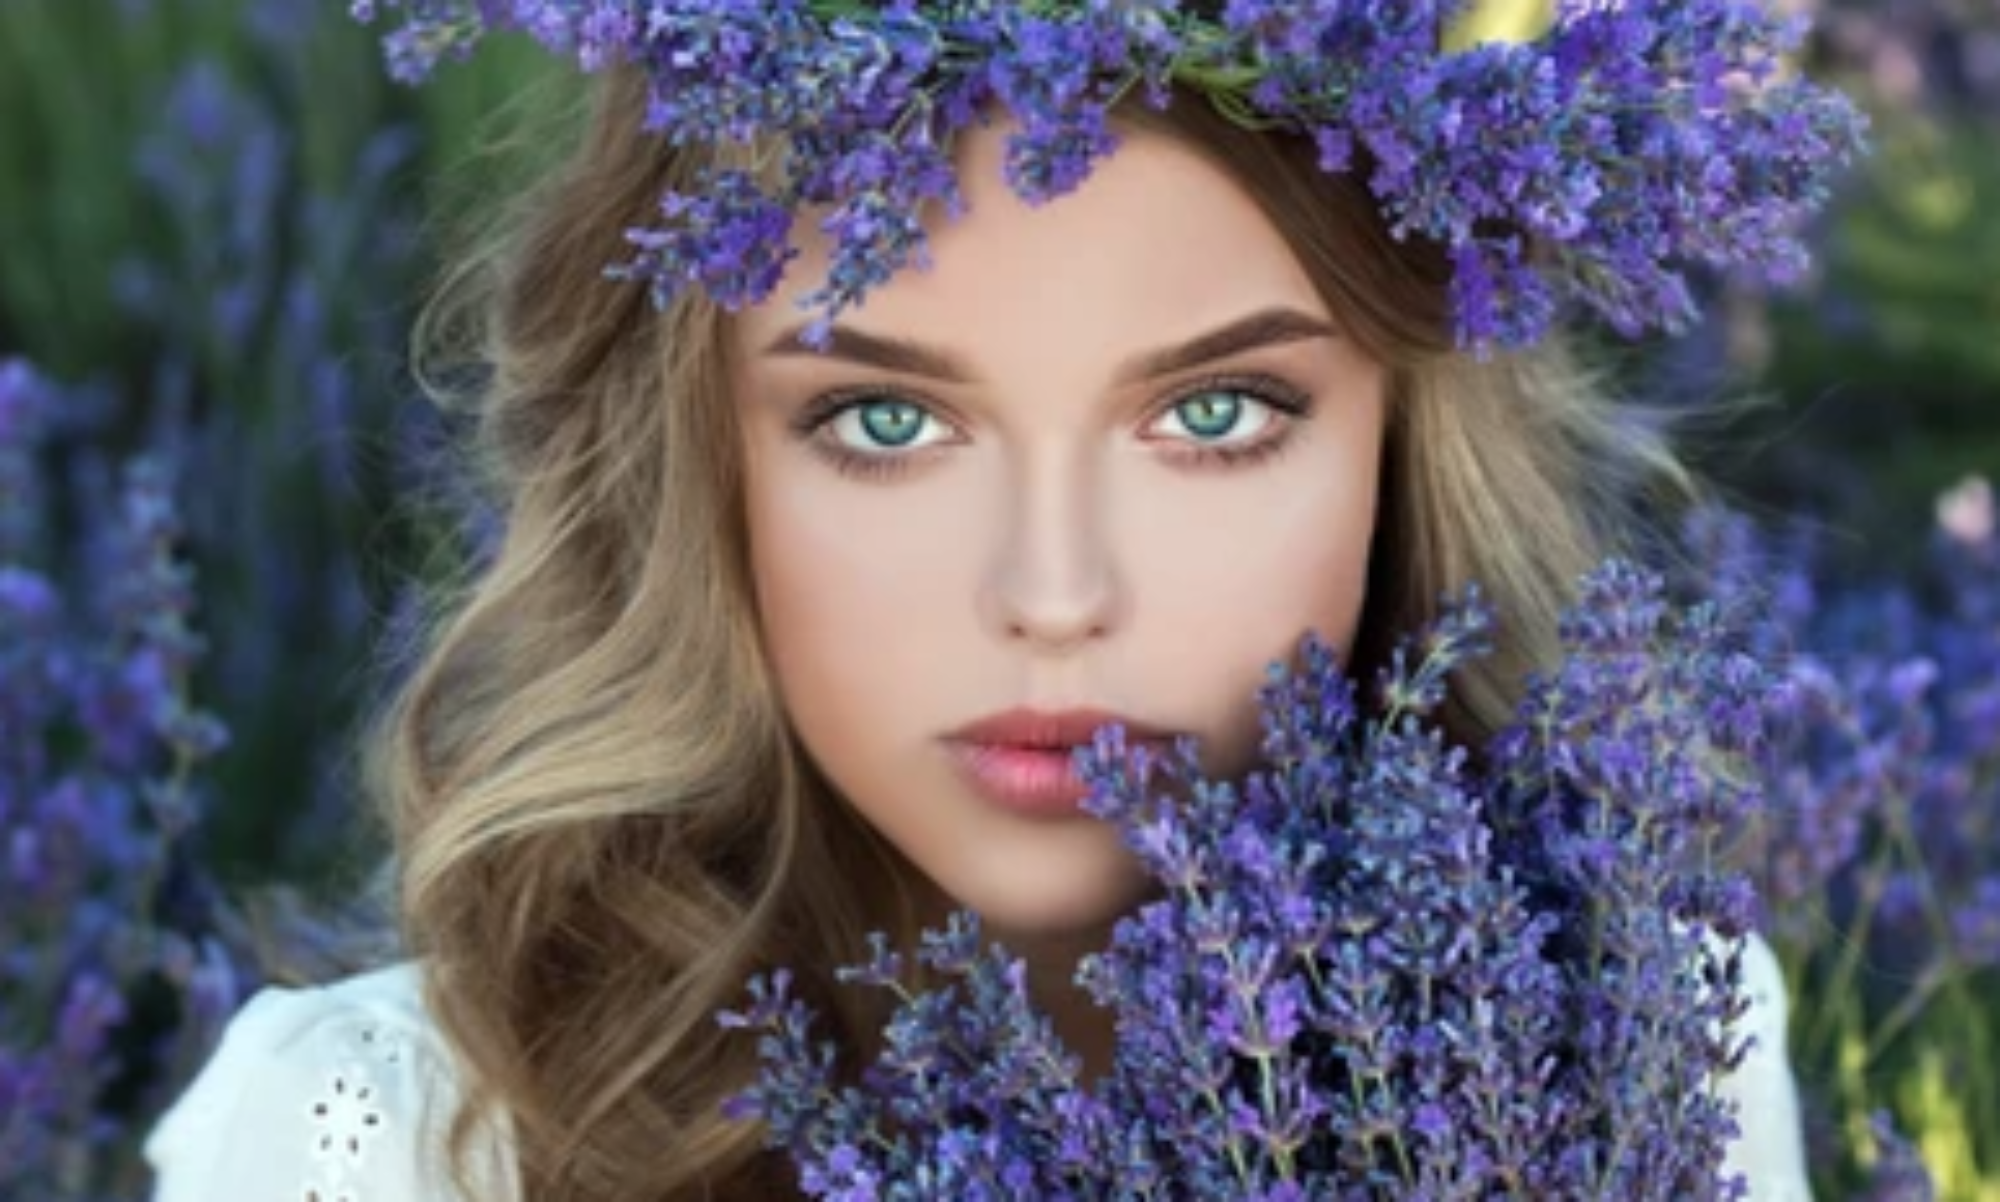 Lavender The Spa – Hair Salon, Pilates, Day Spa, Facials, Massage